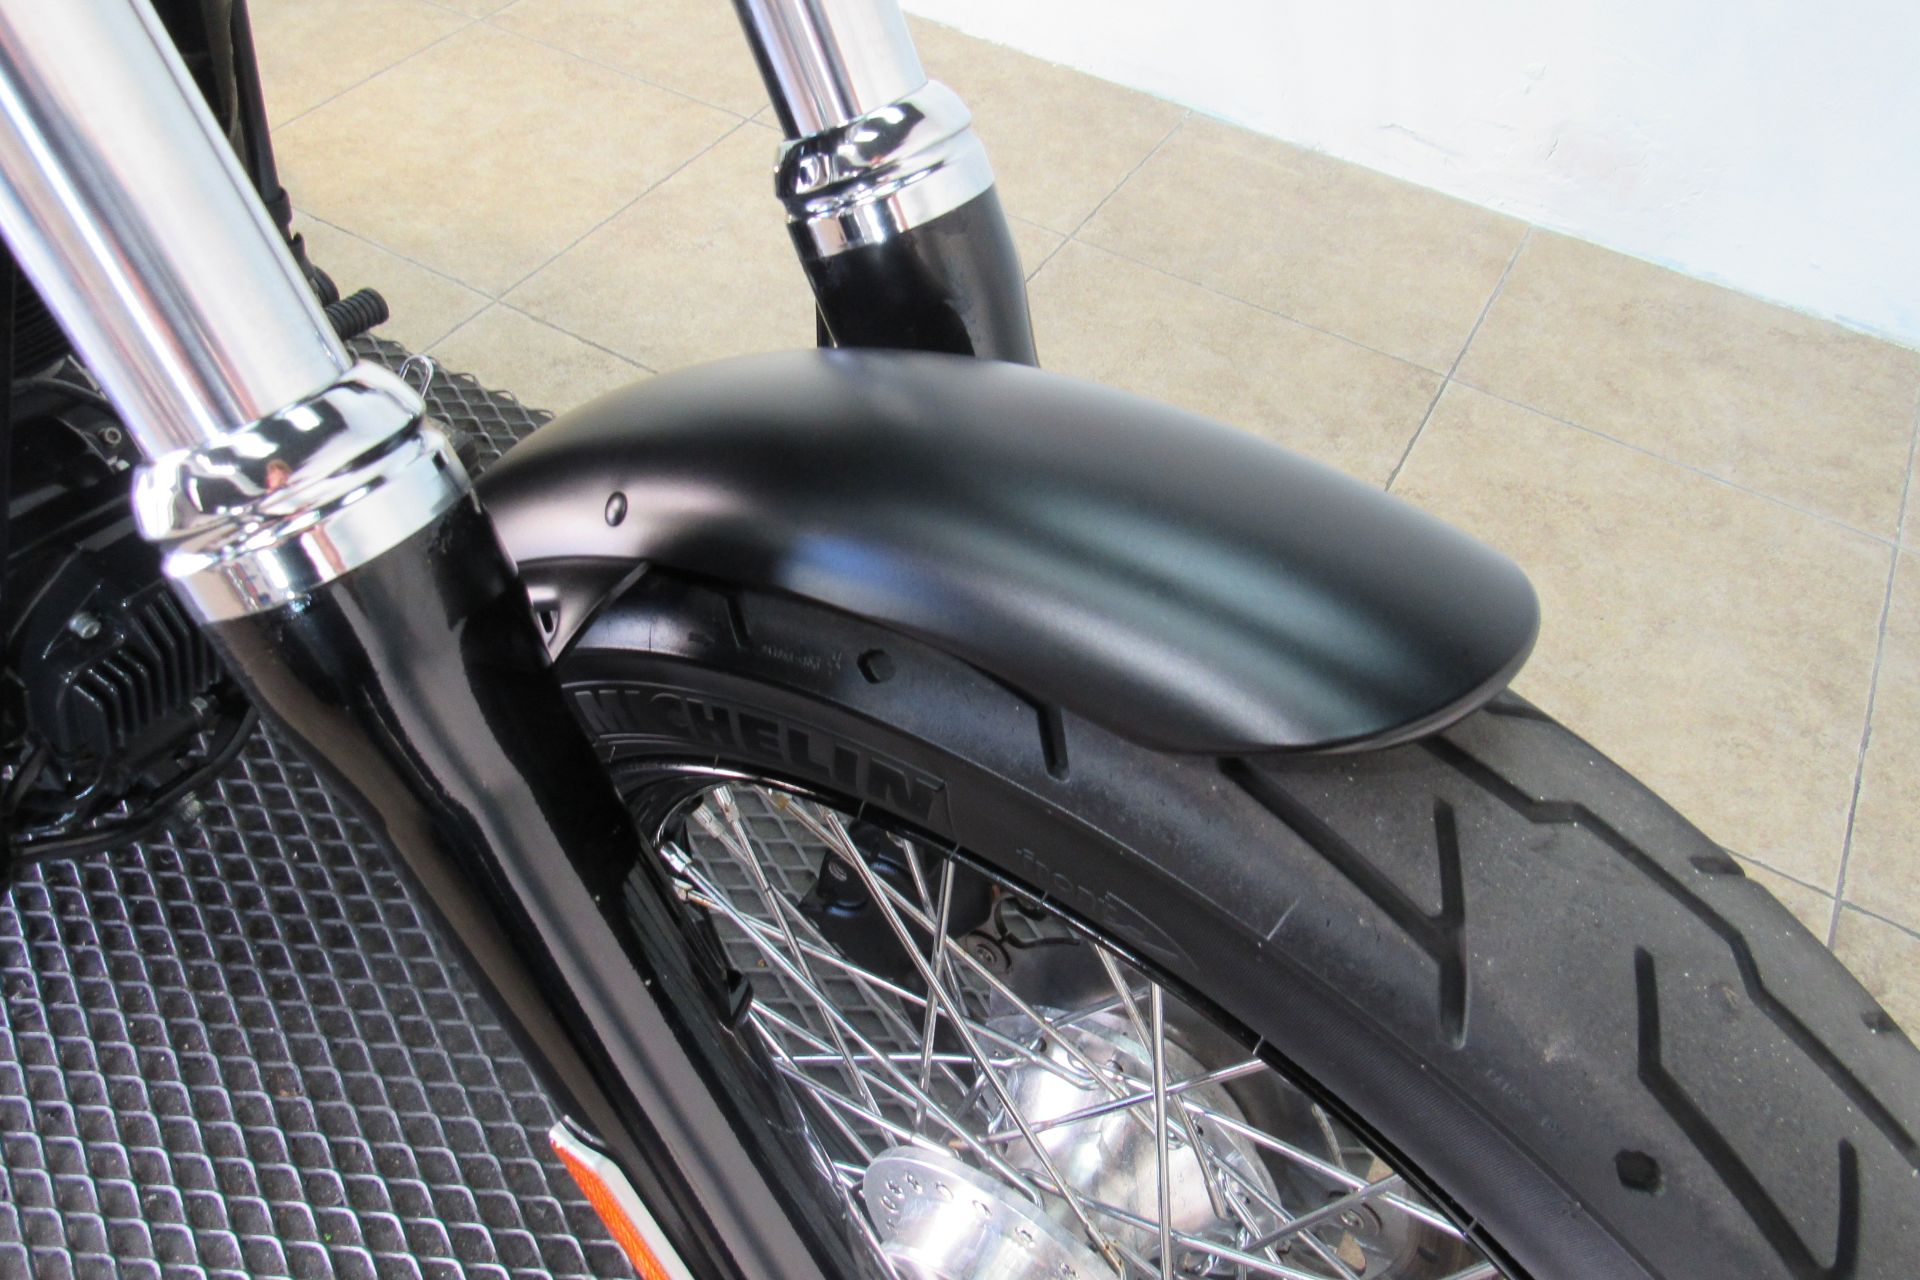 2014 Harley-Davidson Dyna® Street Bob® in Temecula, California - Photo 16